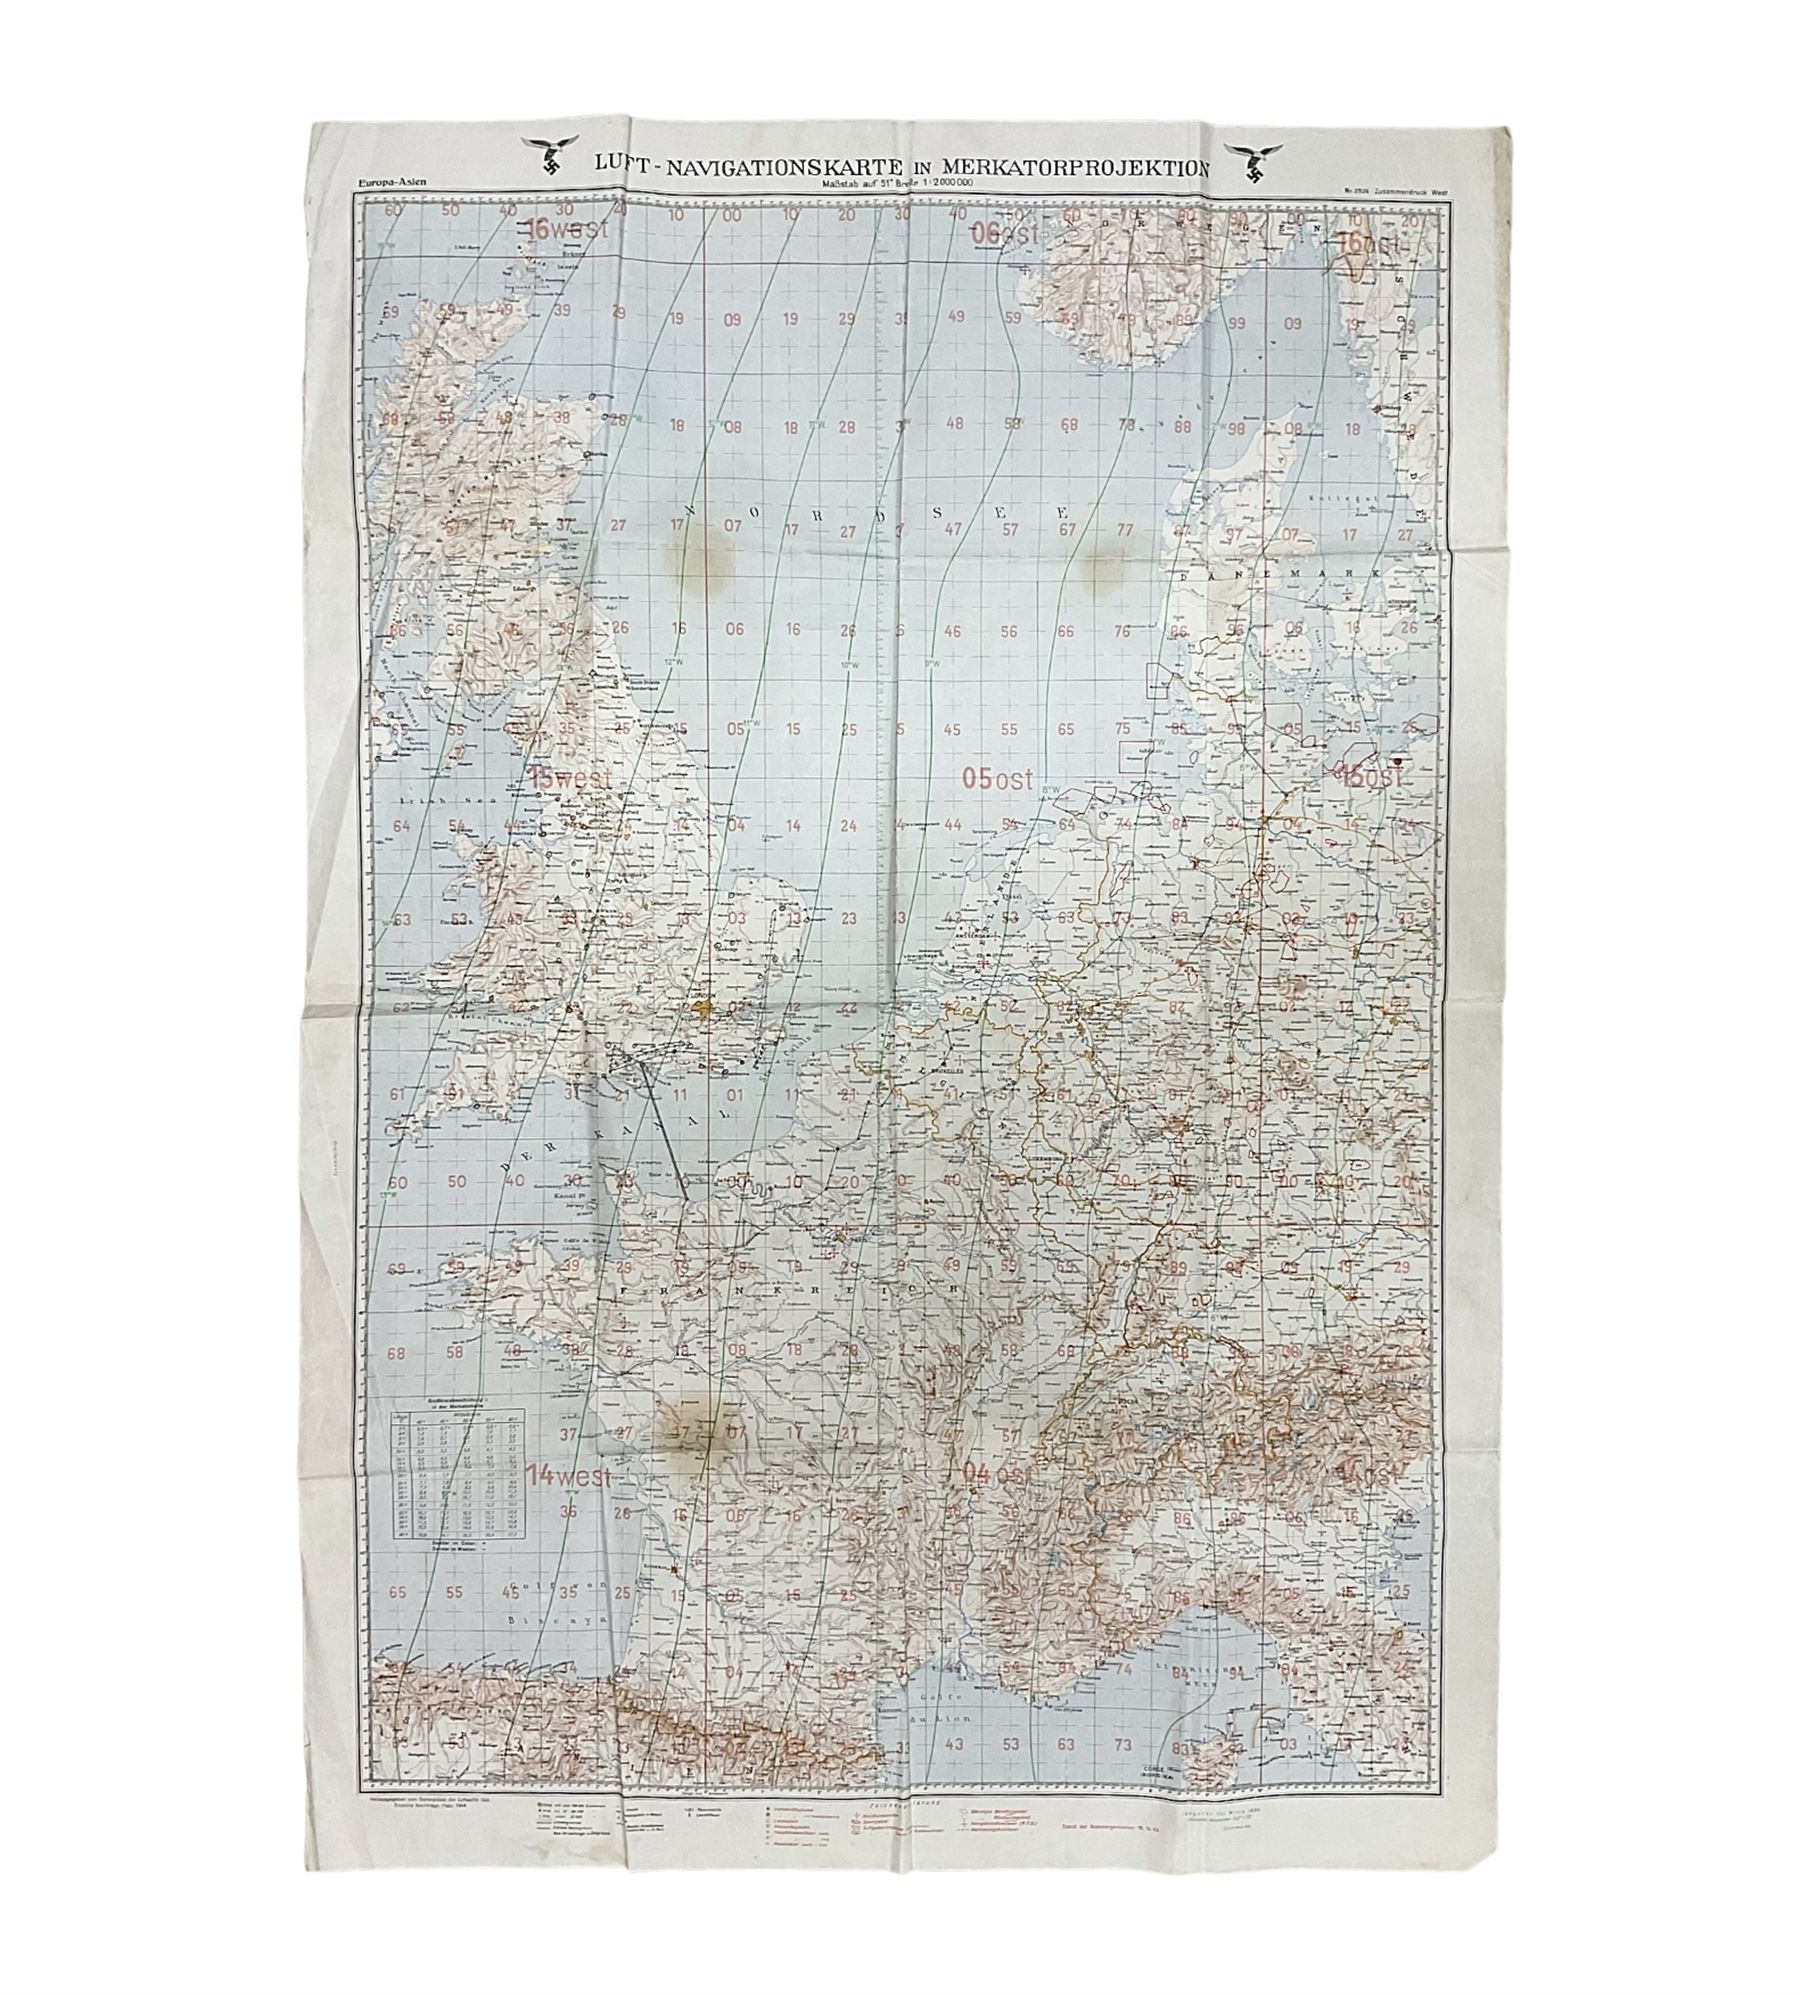 WWII German navigation map